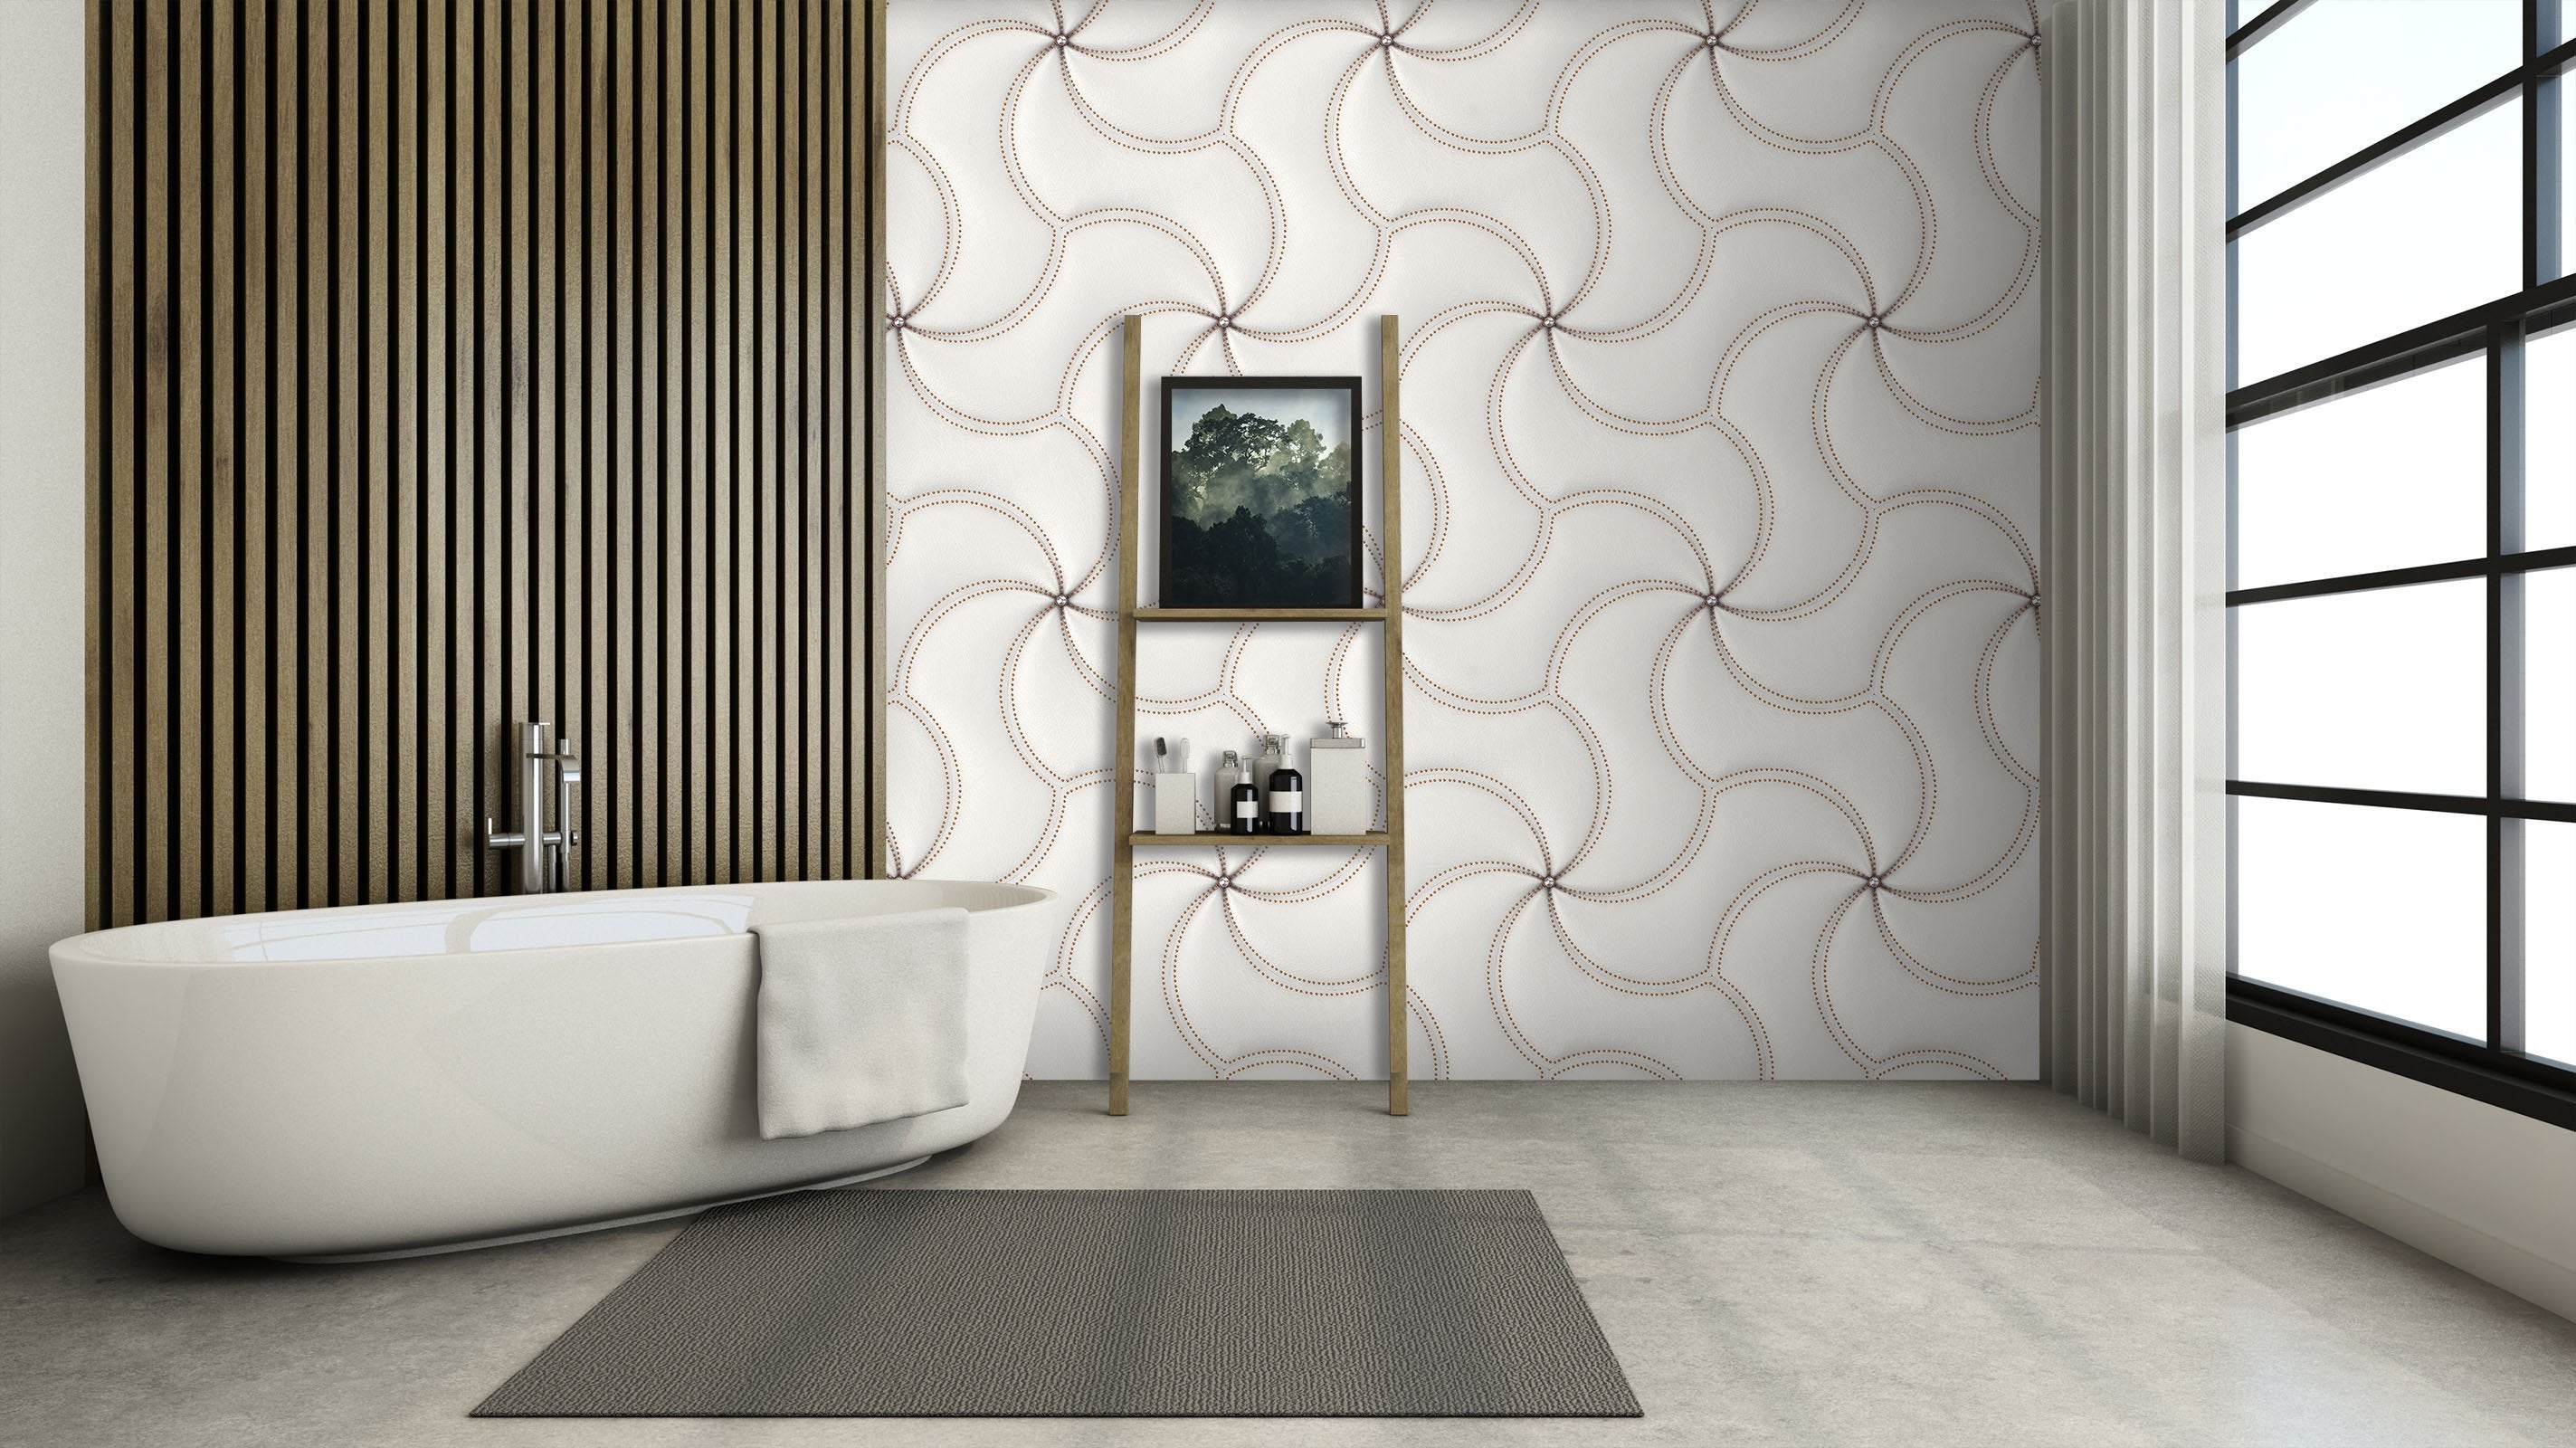 3D White Windmill 079 Marble Tile Texture Wallpaper AJ Wallpaper 2 